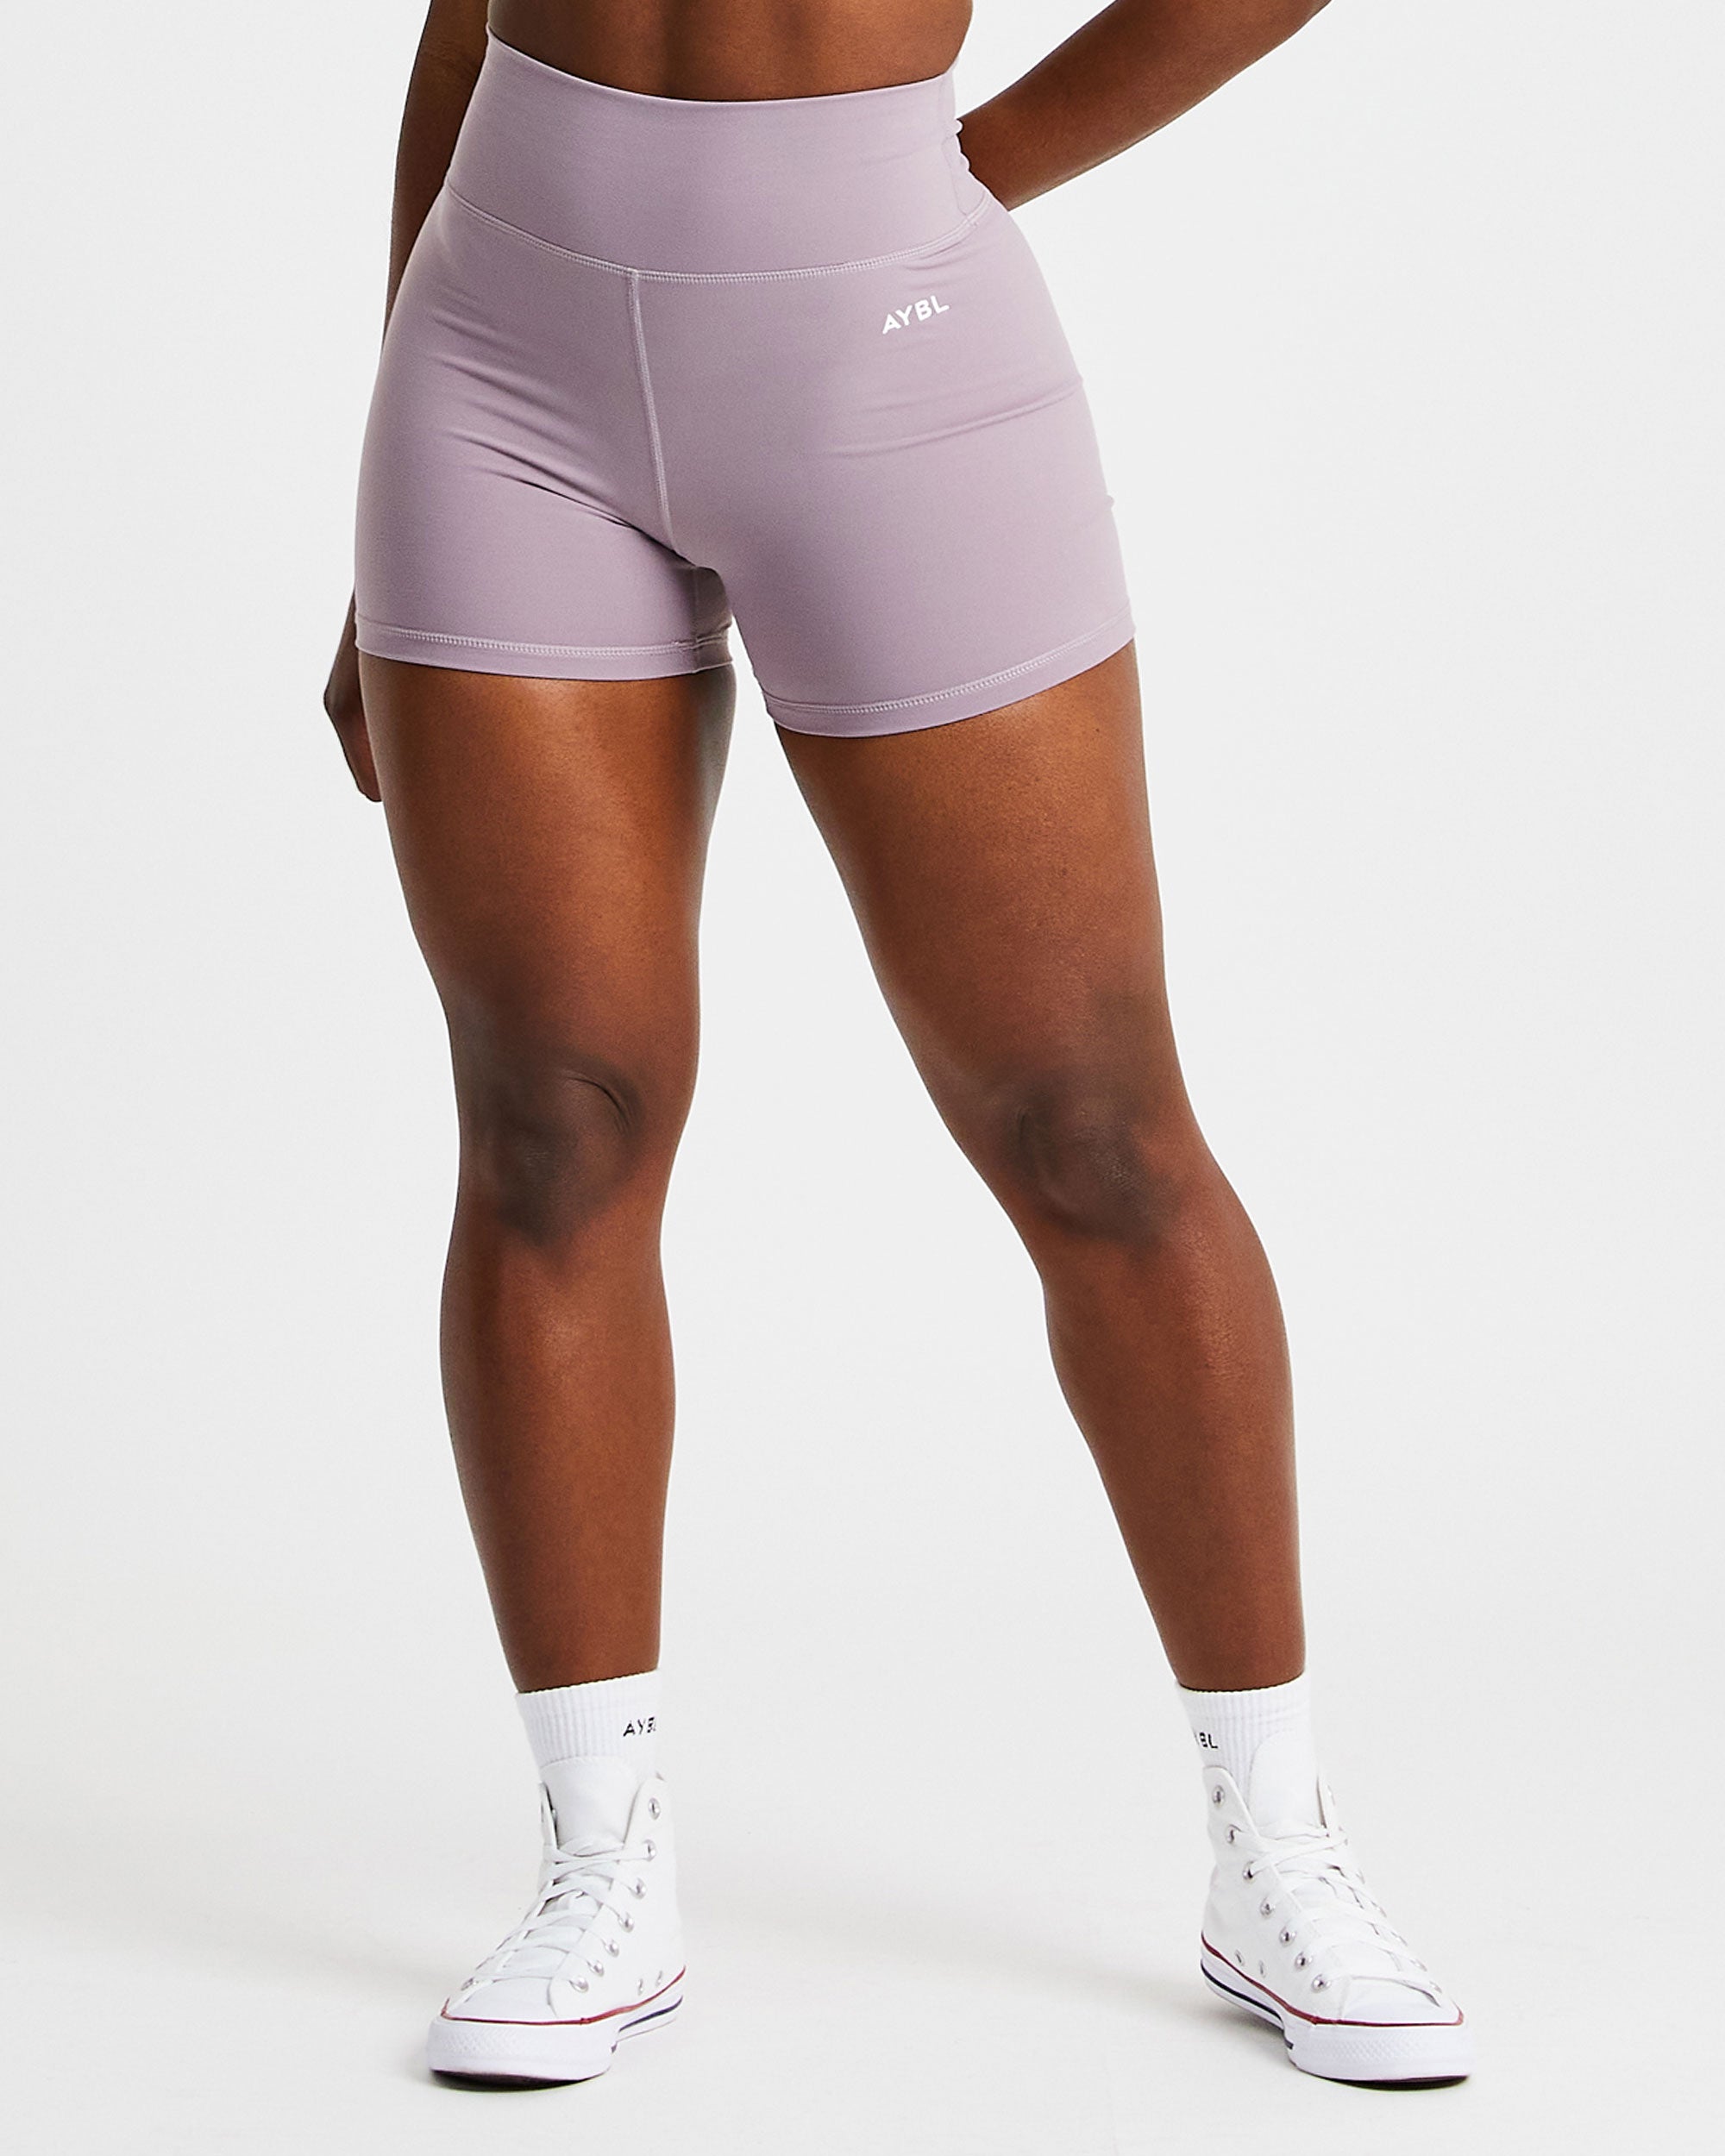 AYBL Define Work Out / Gym Shorts Size XL/UK14-16 RRP £30